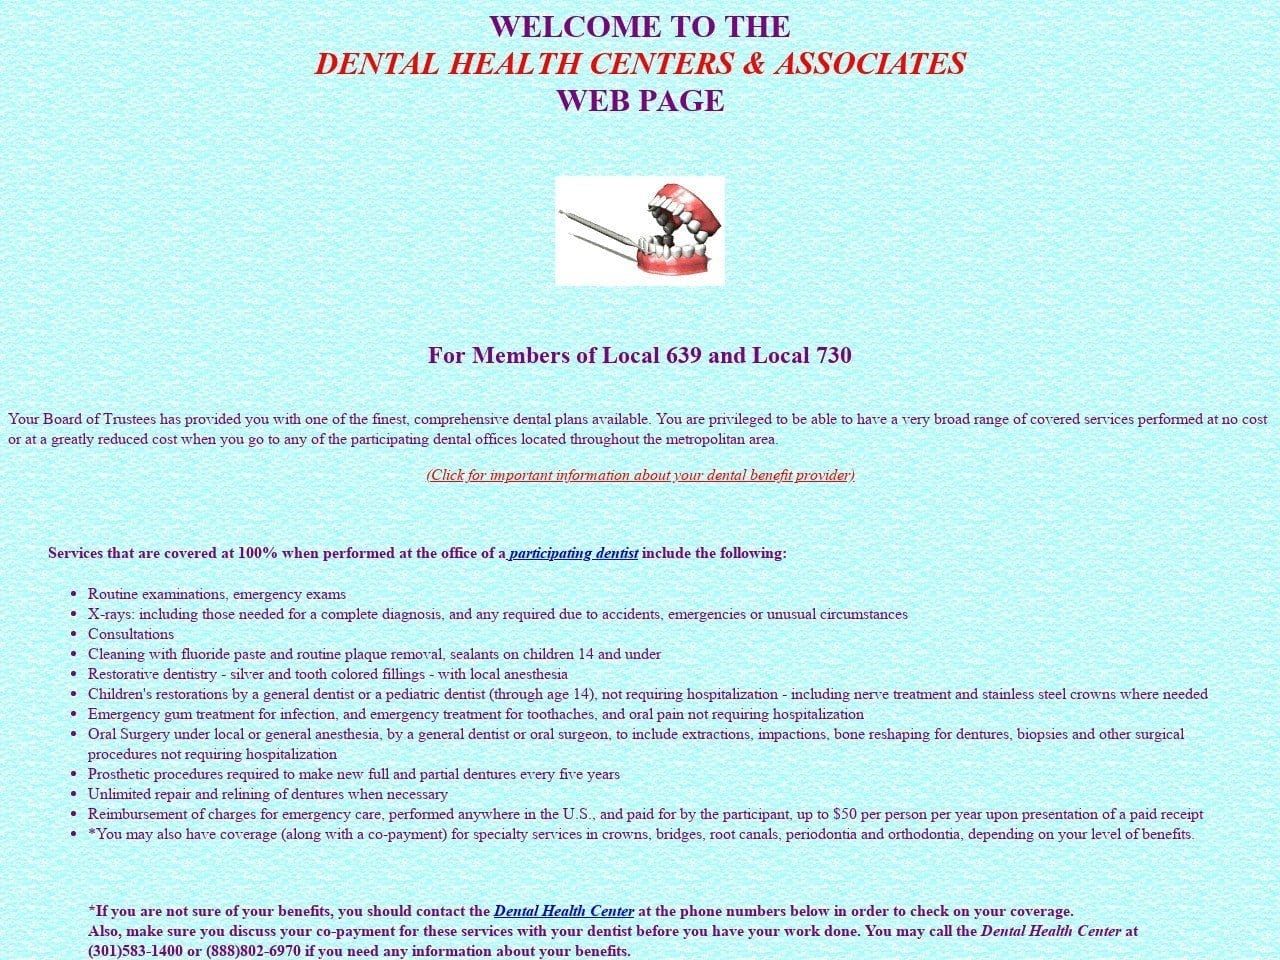 Dental Health Center Website Screenshot from dhcandassociates.com